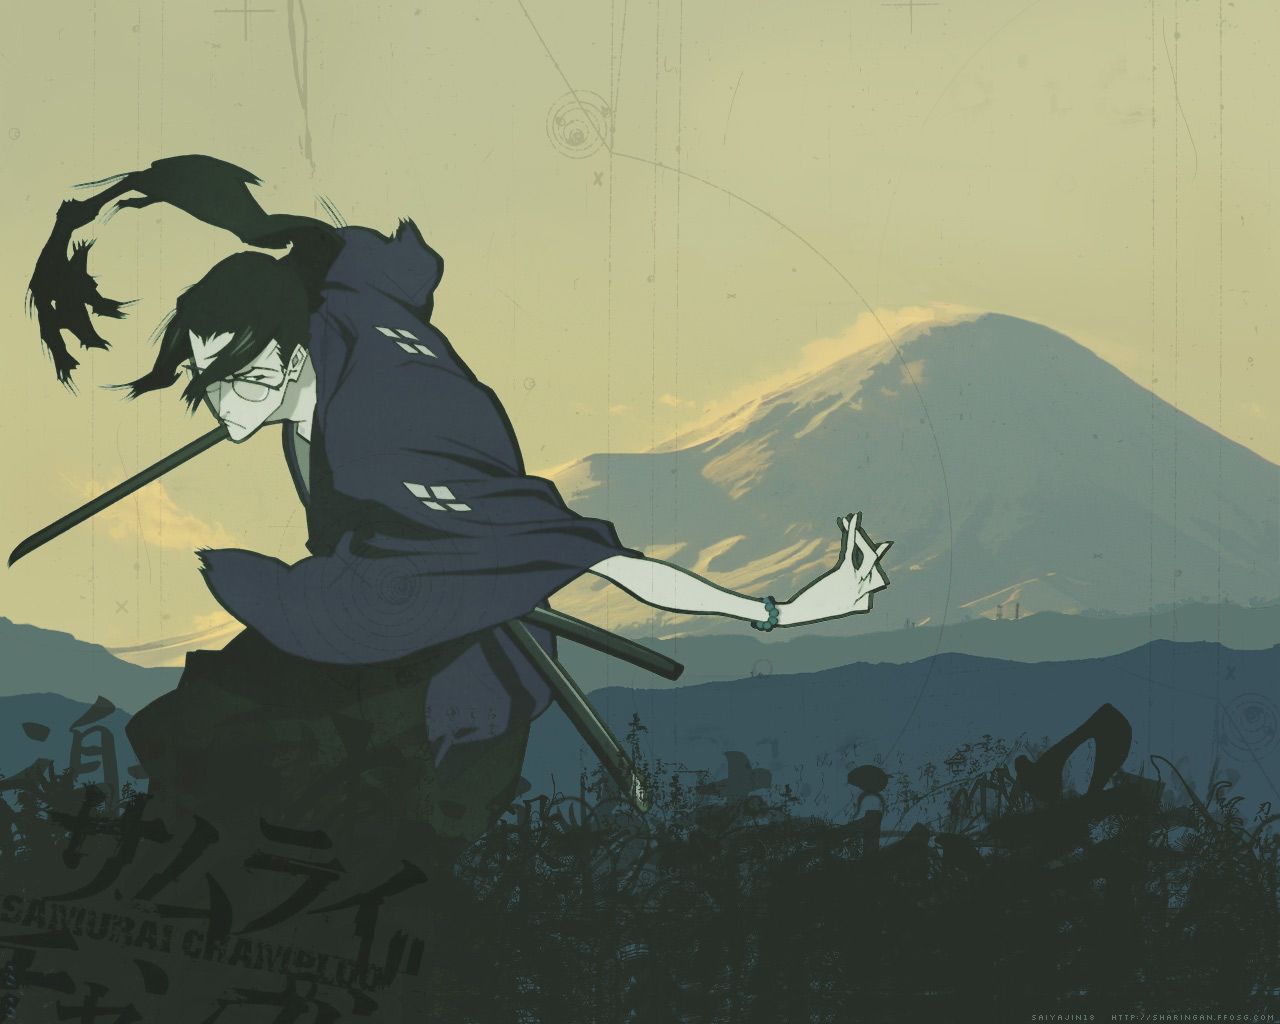 68 Samurai Champloo HD Wallpapers | Backgrounds - Wallpaper Abyss